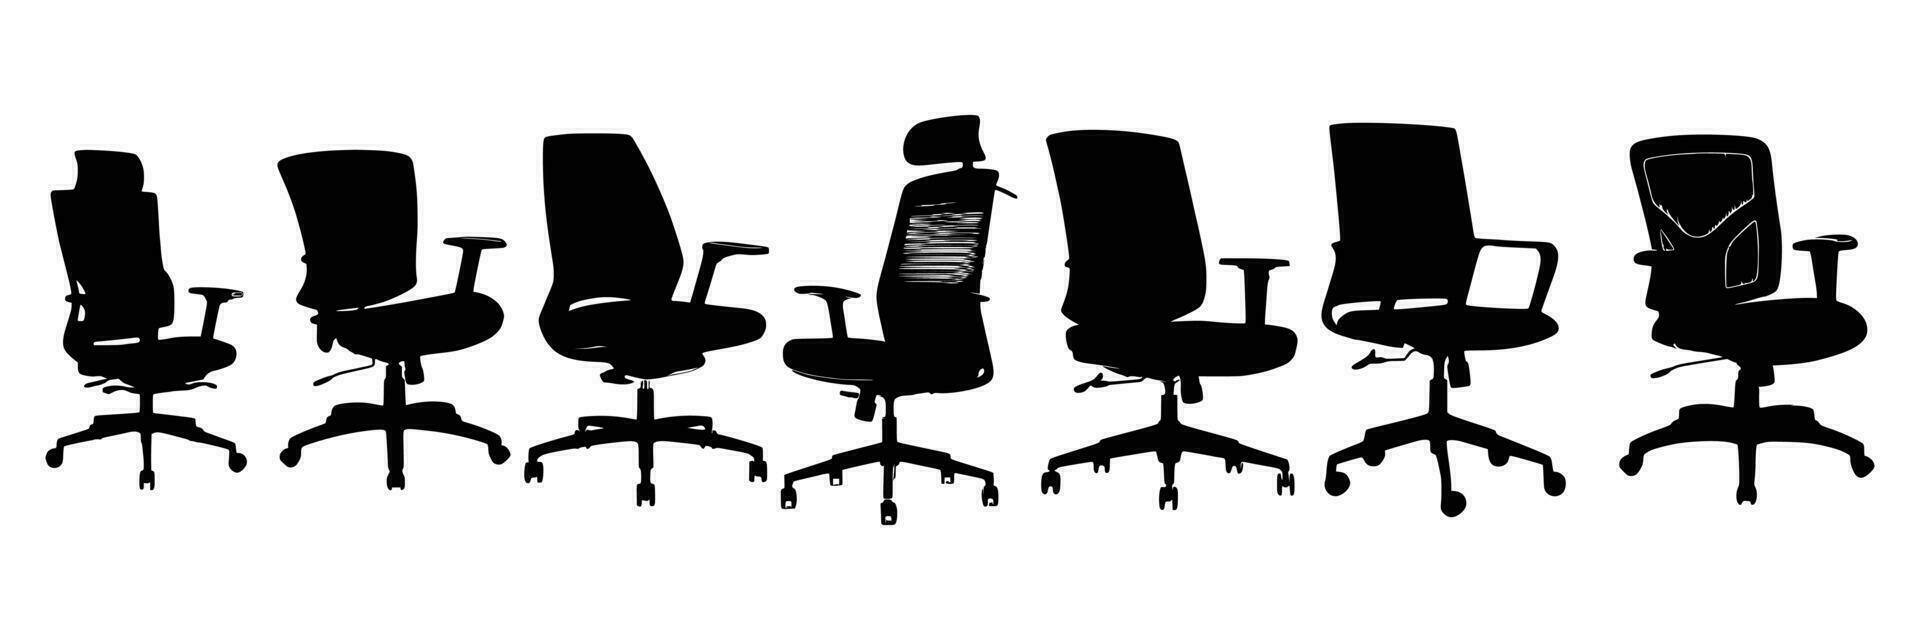 Siete oficina sillas siluetas vector diseño.